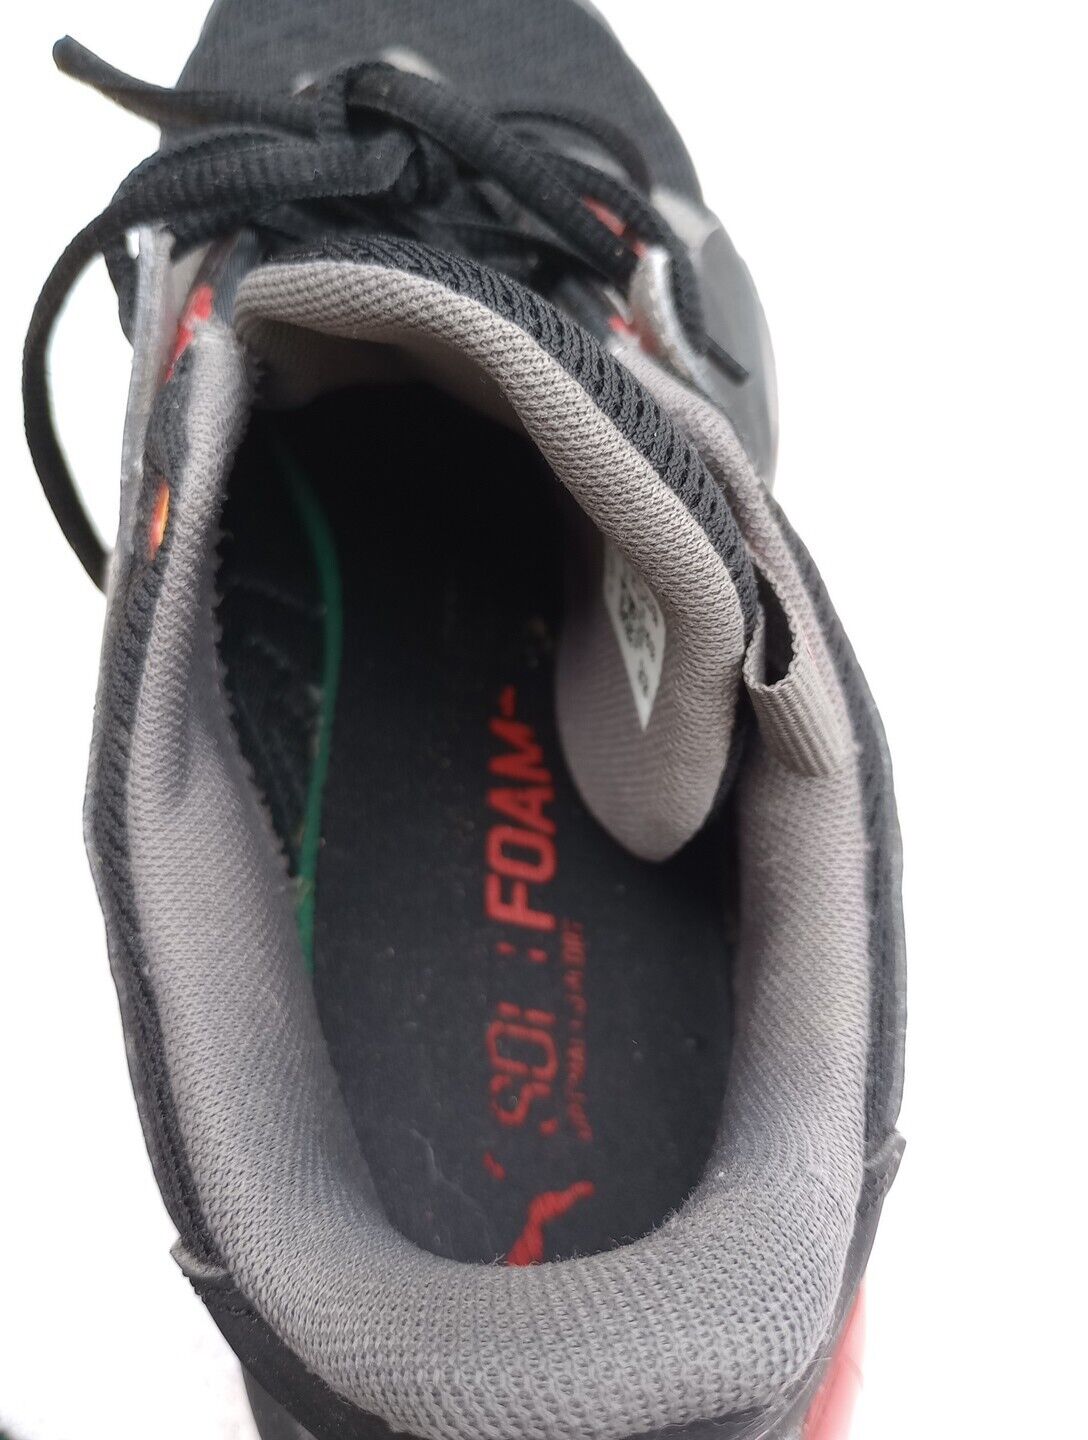 Puma Cell Pharos Black Shoes Size 10 - image 5